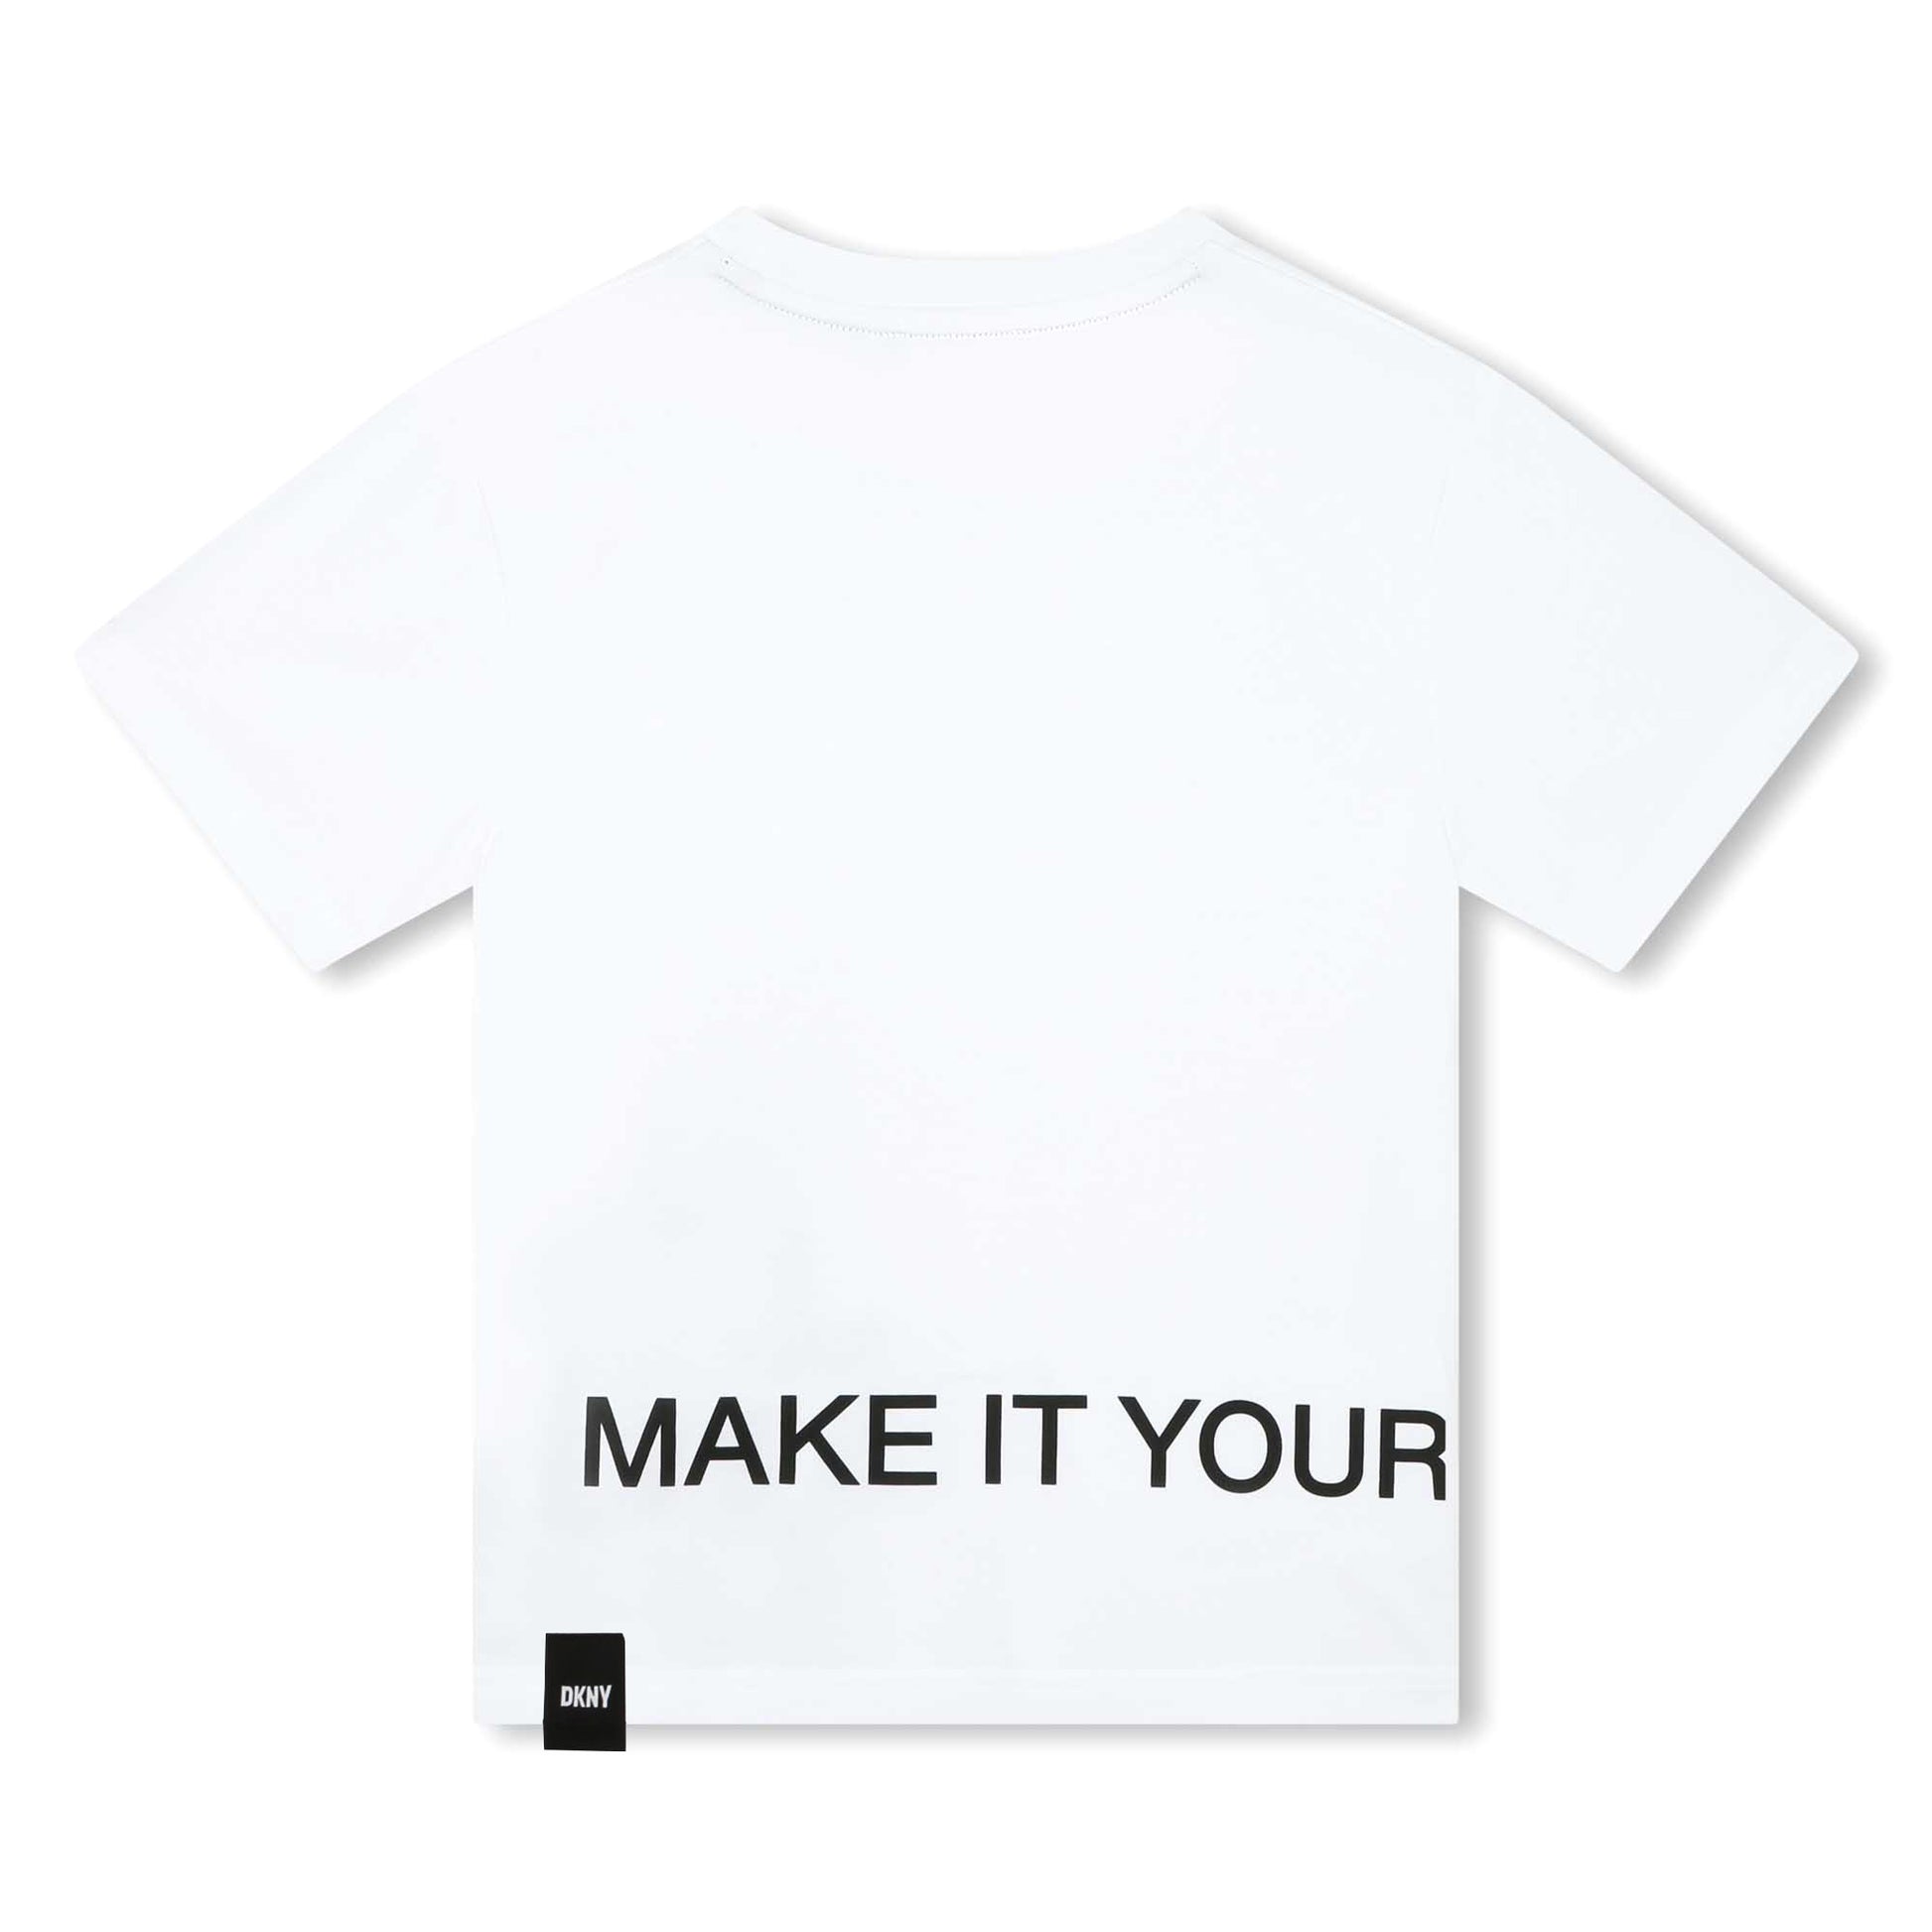 Tiktok Summer Tshirts For Children Clothes Tik Tok Kids Fashion Trendy  Cotton T Shirt Baby Boys Girls Short Sleeve T Shirt Tee Tops G62NBDQ From  Sweet_products, $7.43